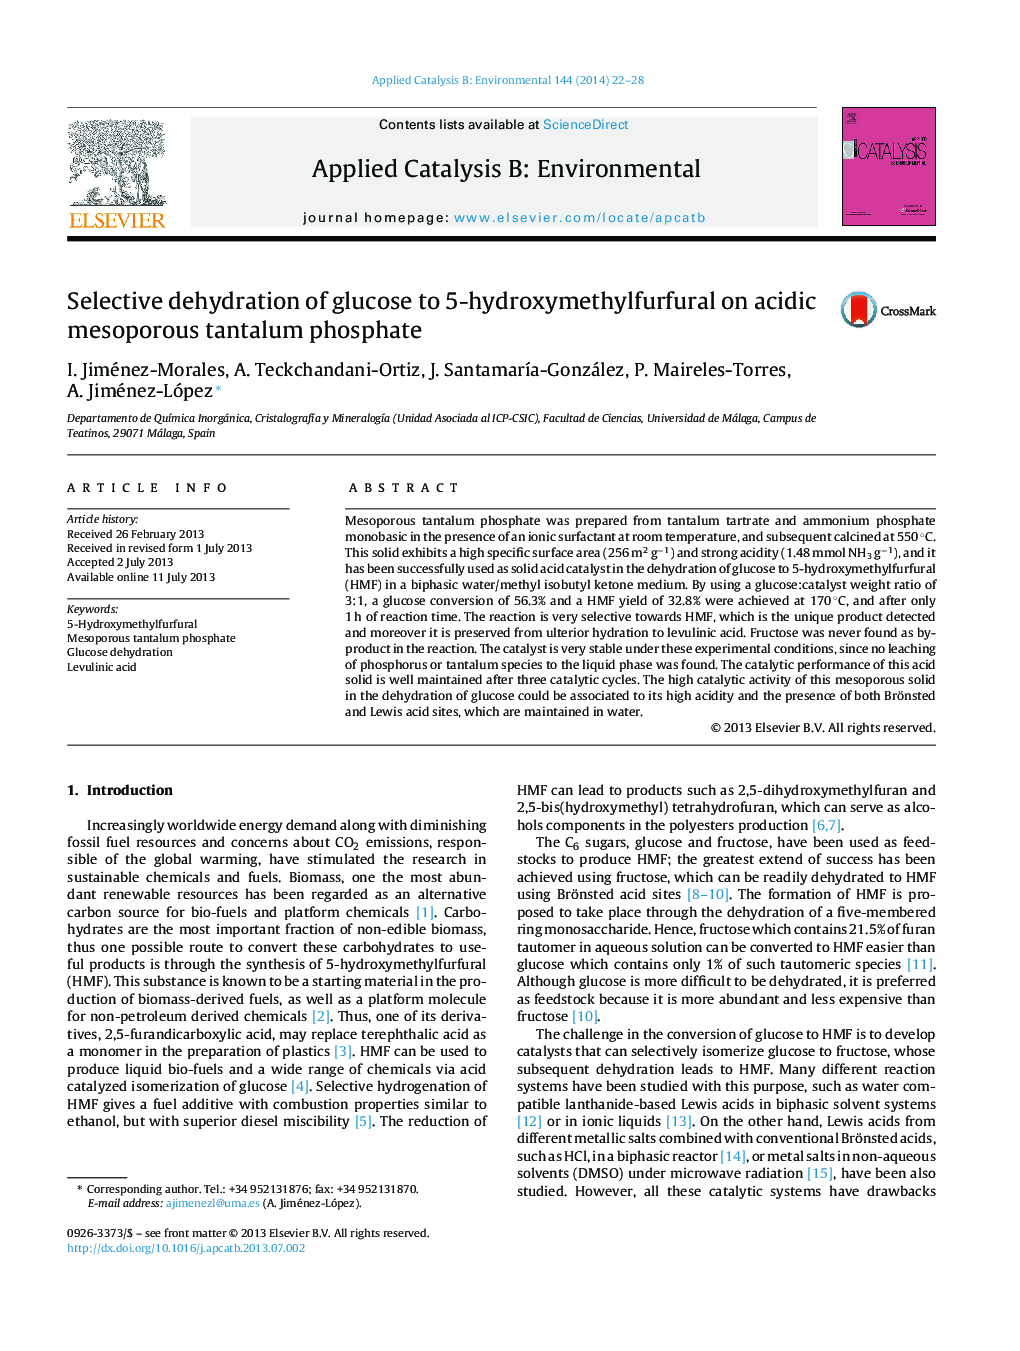 Selective dehydration of glucose to 5-hydroxymethylfurfural on acidic mesoporous tantalum phosphate